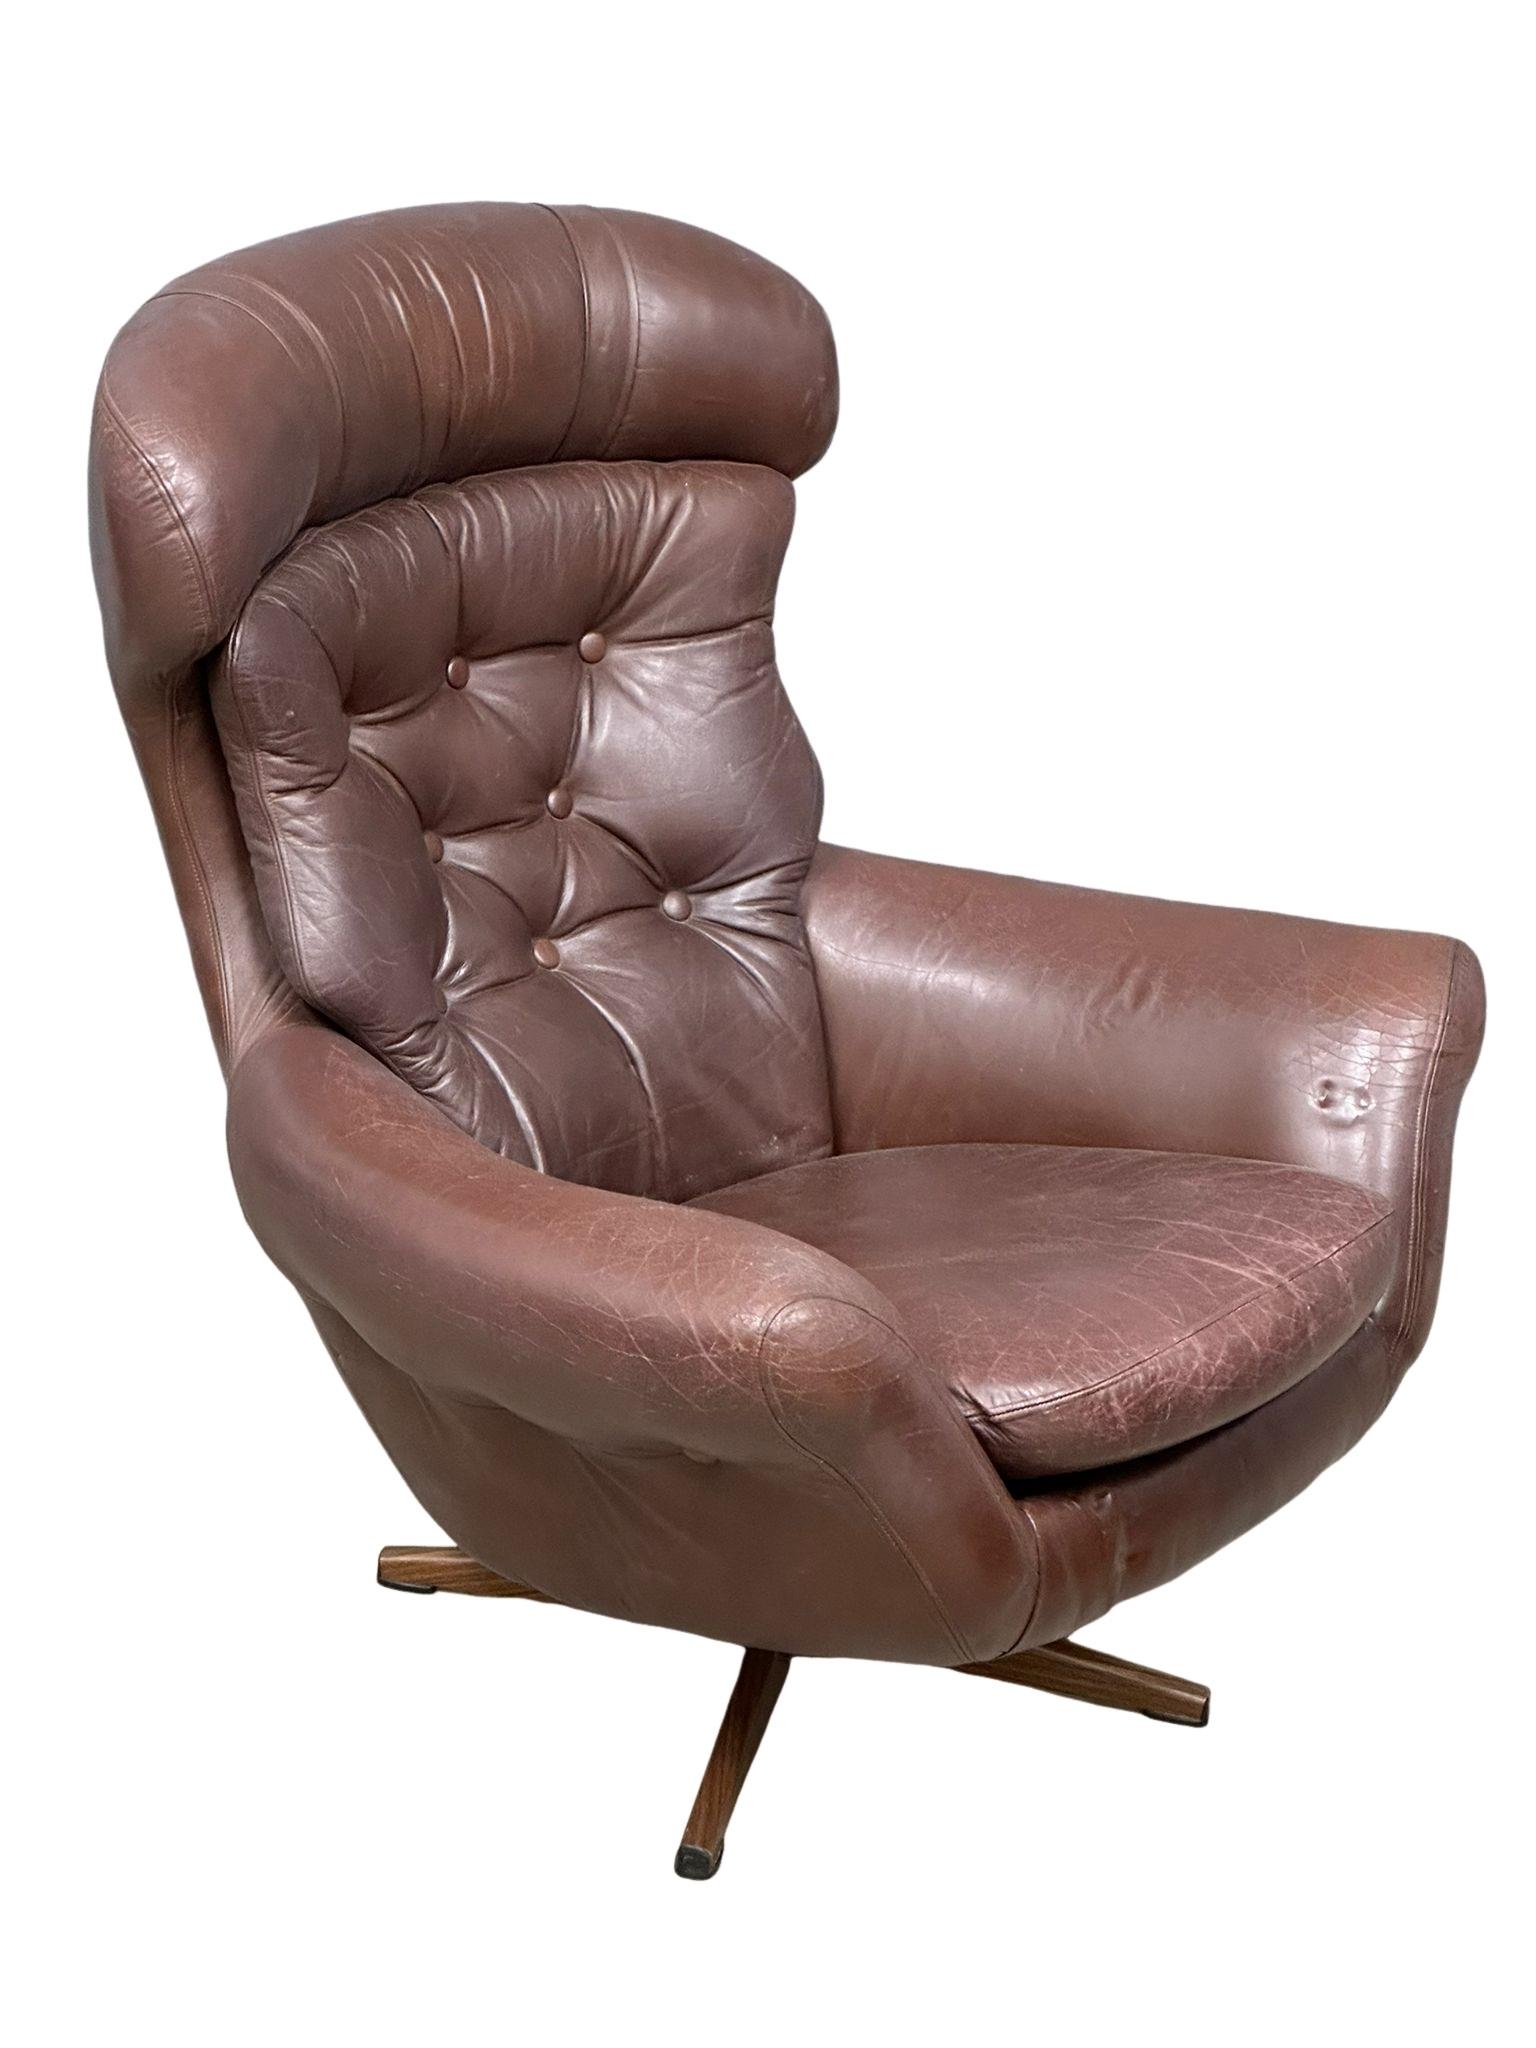 A Swedish Mid Century Gungan Slatte leather swivel chair on faux rosewood base.1 - Image 4 of 5